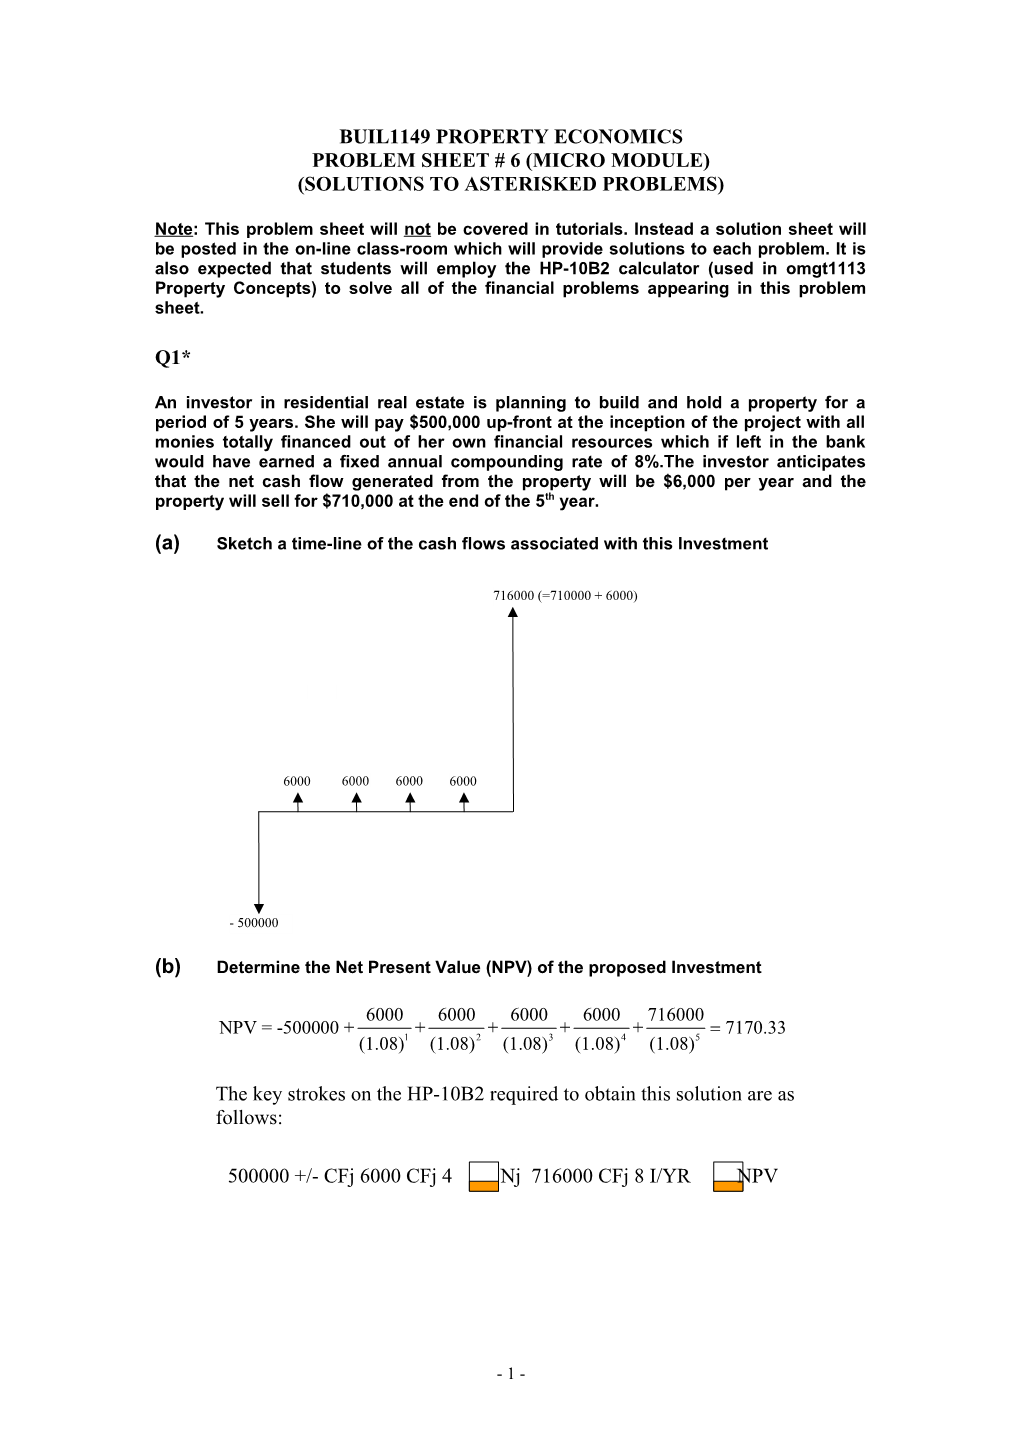 Problem Sheet # 6 (Micro Module)